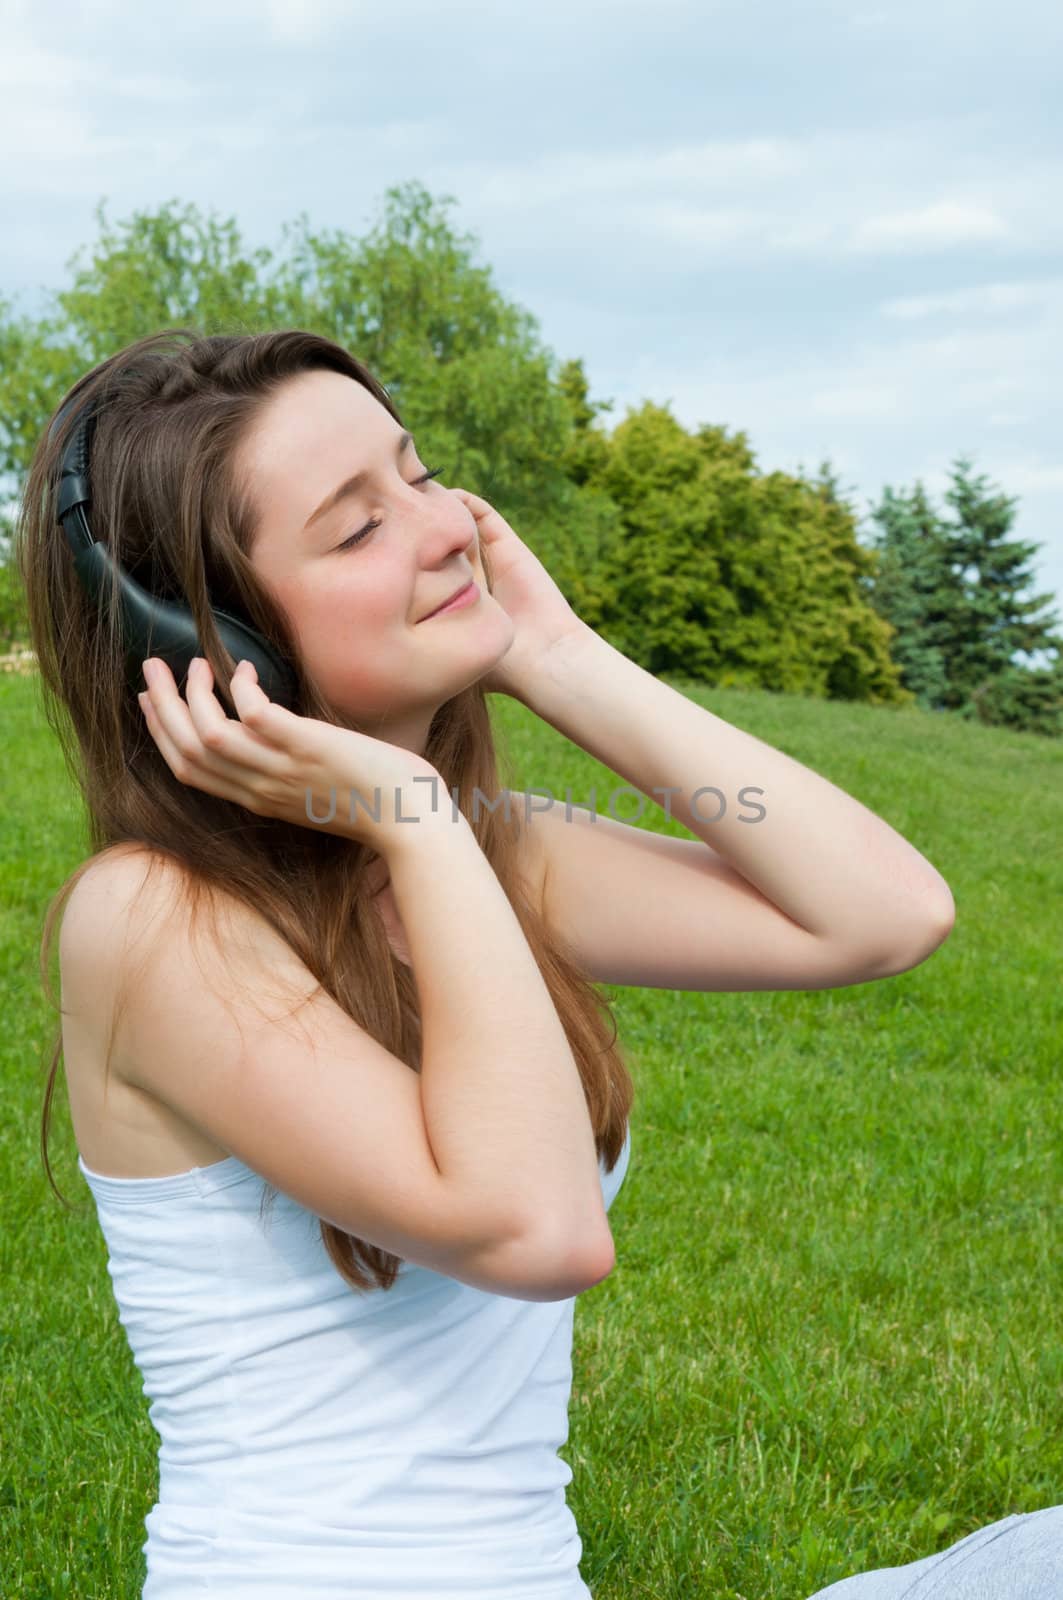 Girl in headphones listens to music in park.